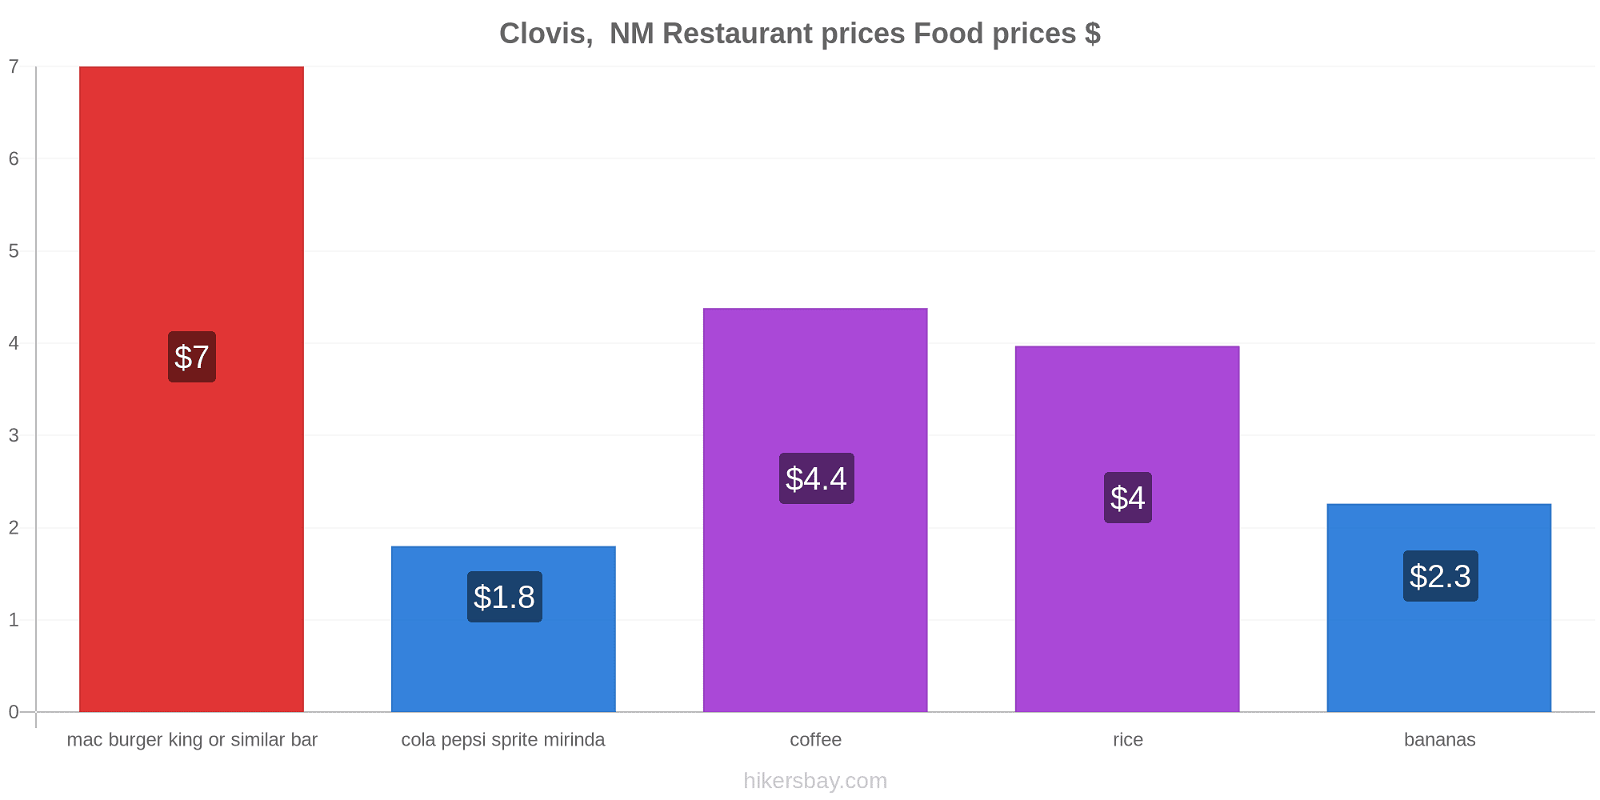 Clovis,  NM price changes hikersbay.com